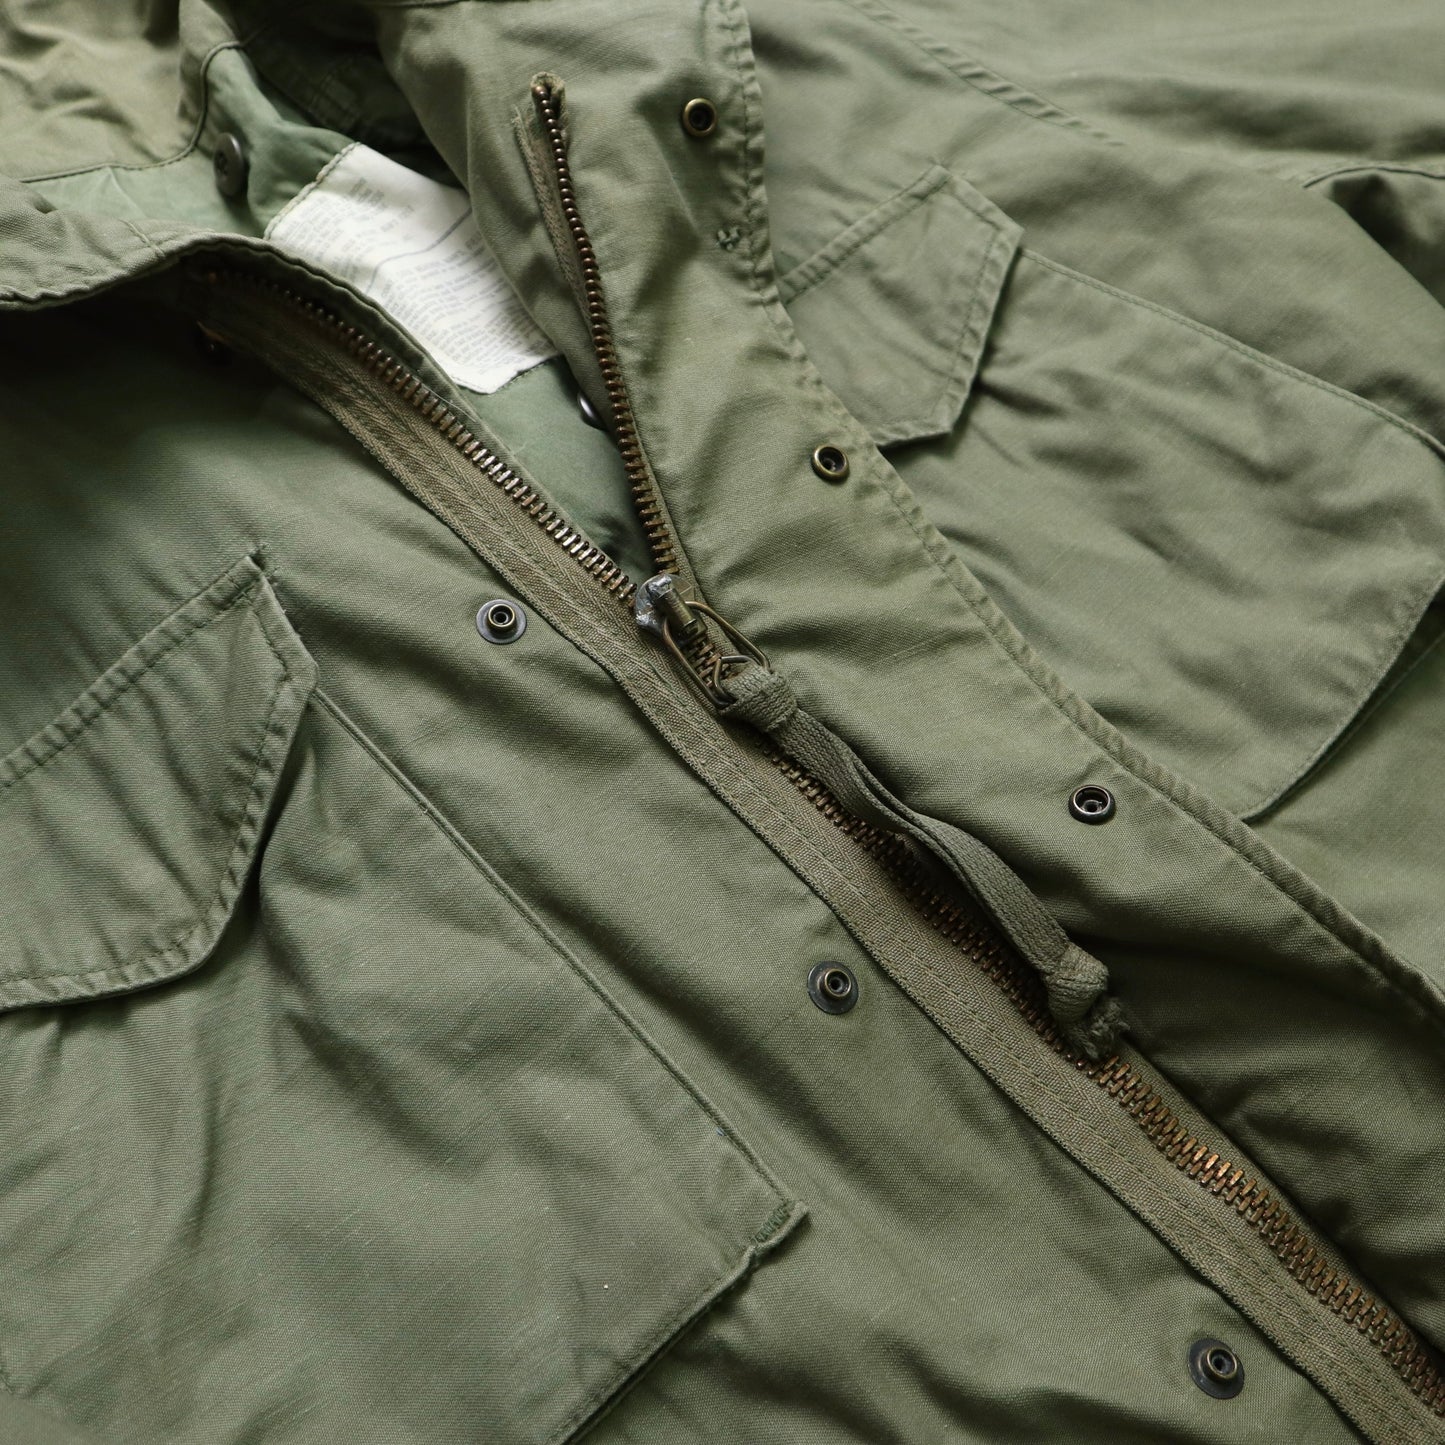 70s US ARMY M65 Field jacket field jacket SMALL REGULAR 